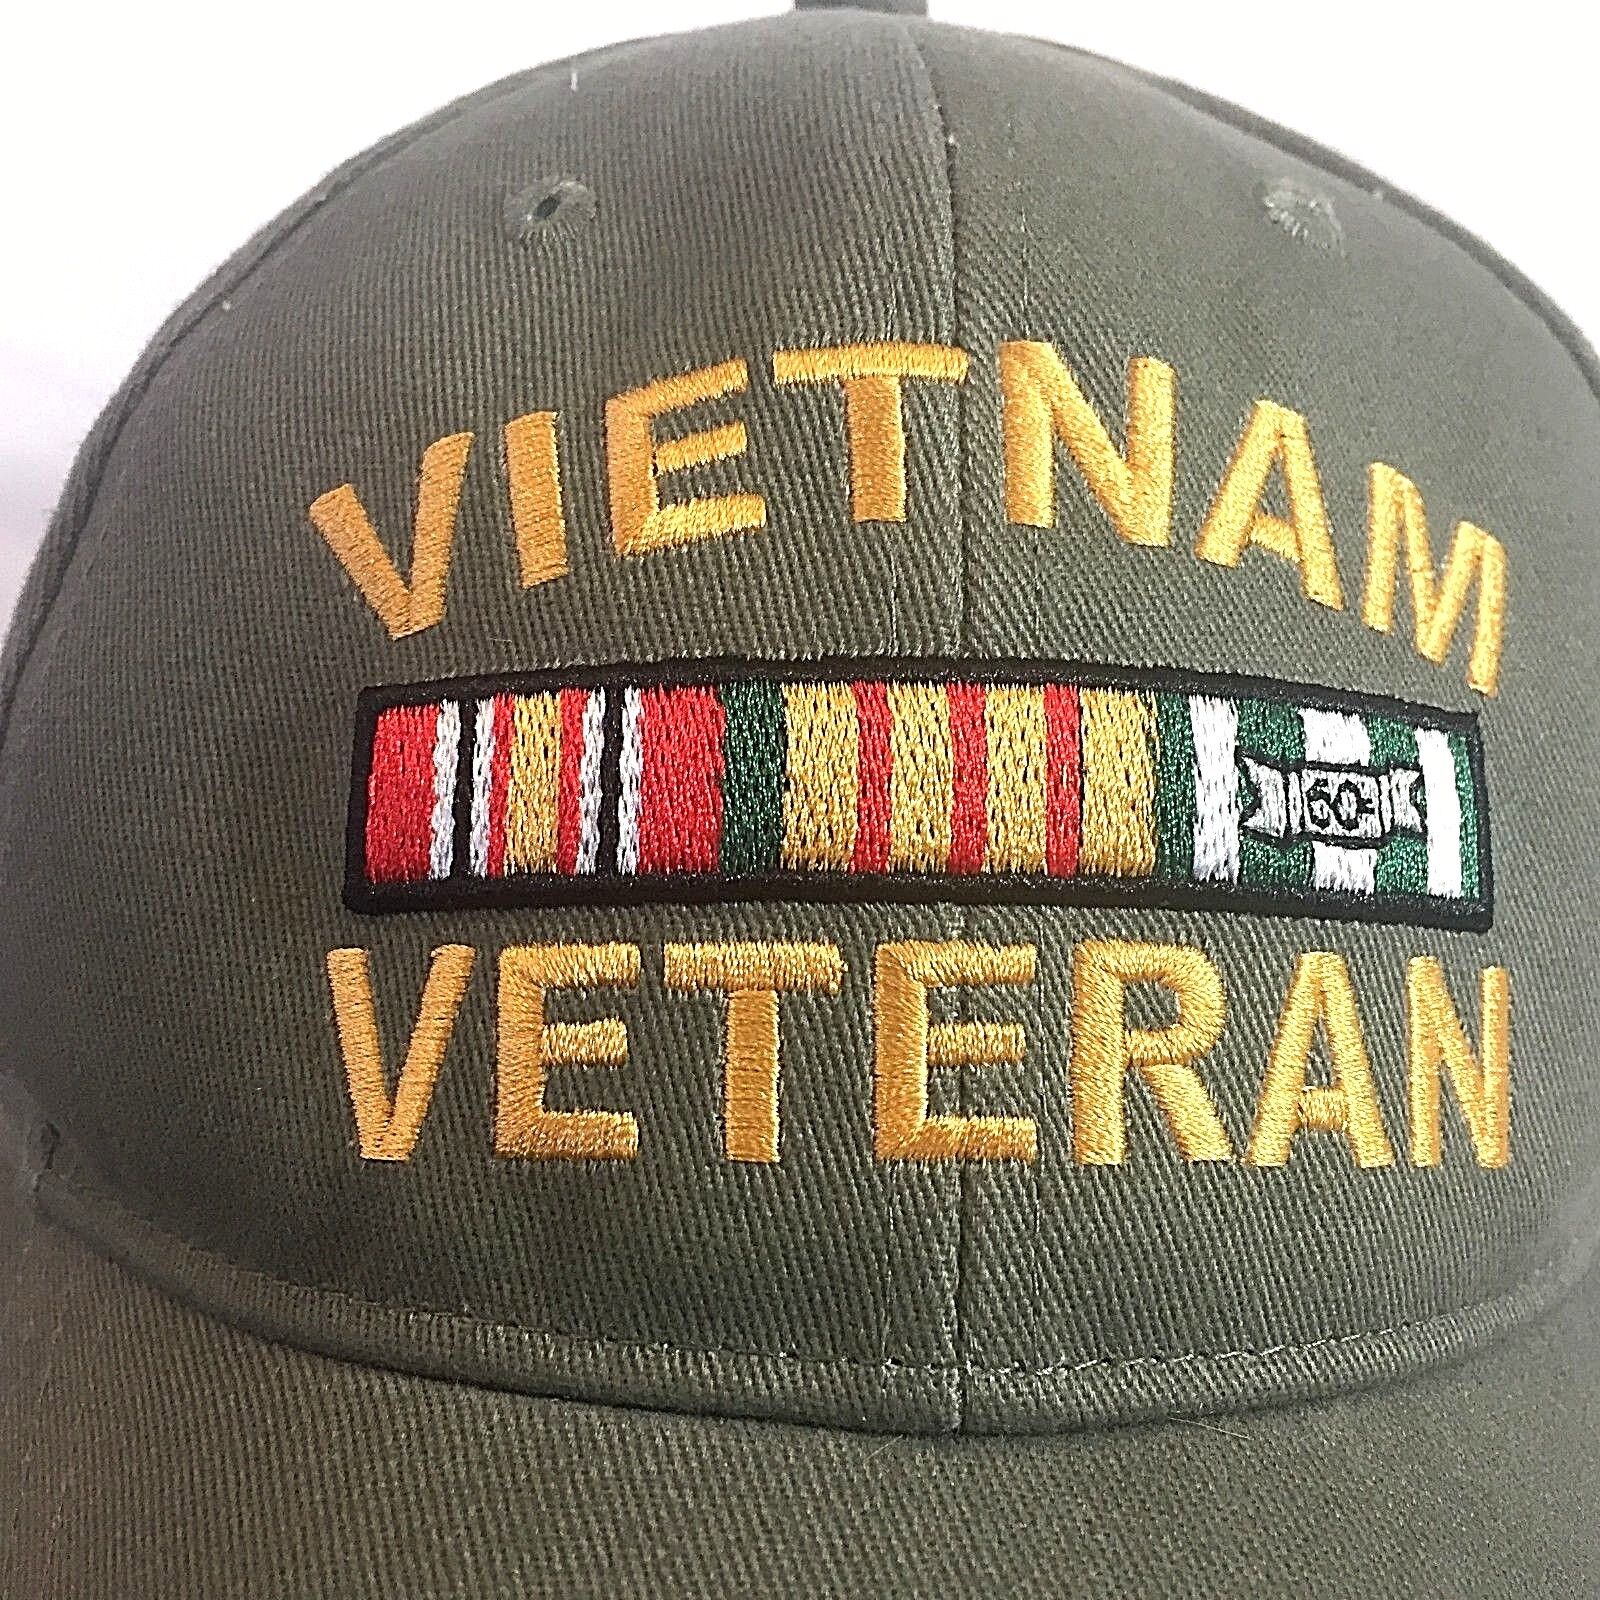 VIETNAM VETERAN Hat Cap New Without Tags  Khaki Green  Ribbon Bar  60